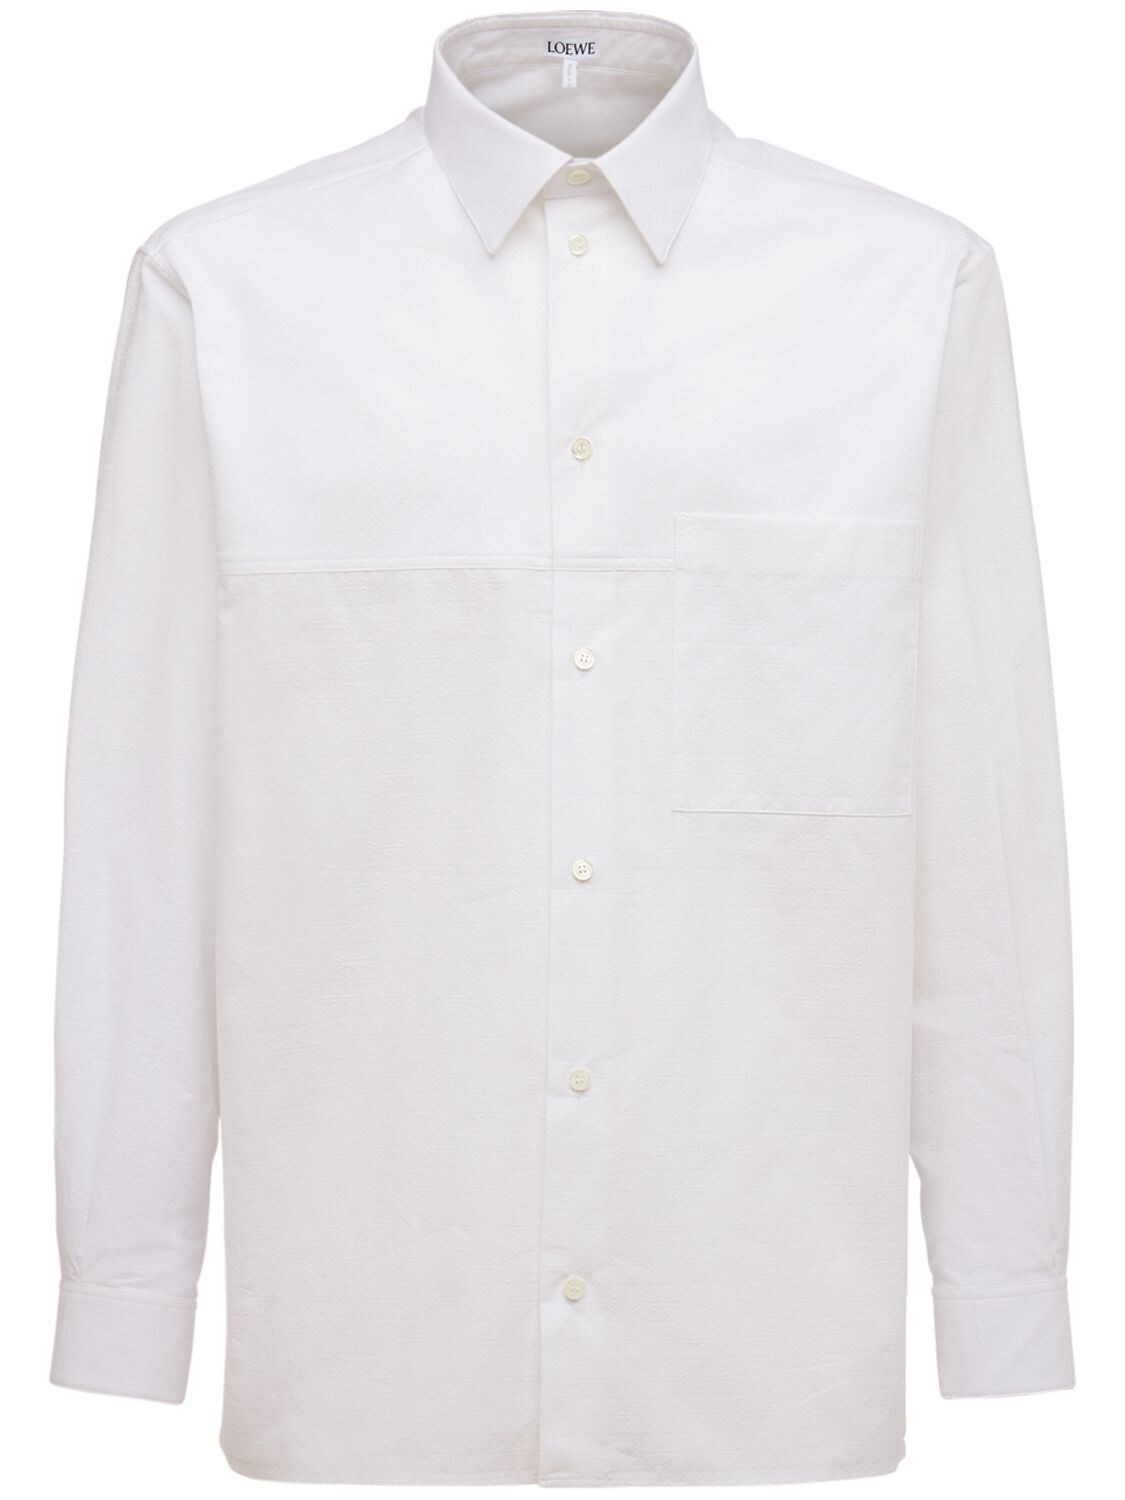 Anagram Jacquard Cotton Shirt